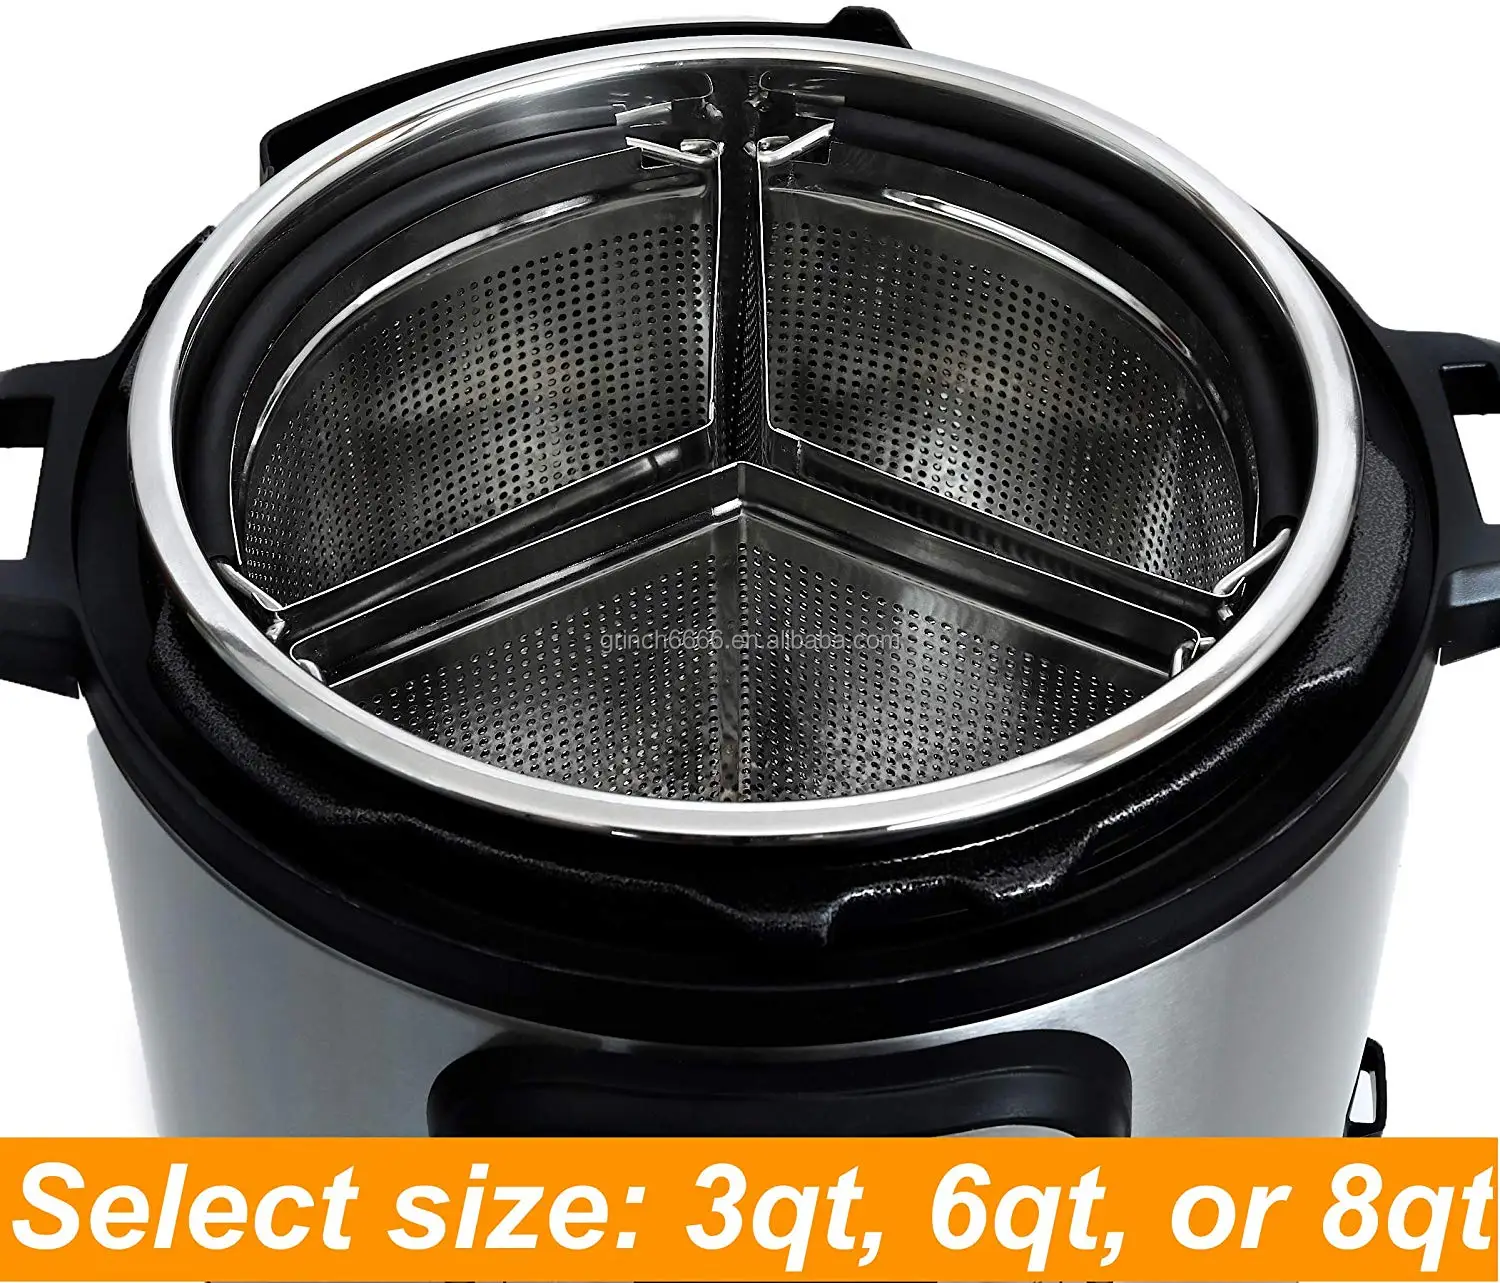 Hatrigo 6-Quart Steamer Basket Compatible with Instant Pot Pressure Cooker  